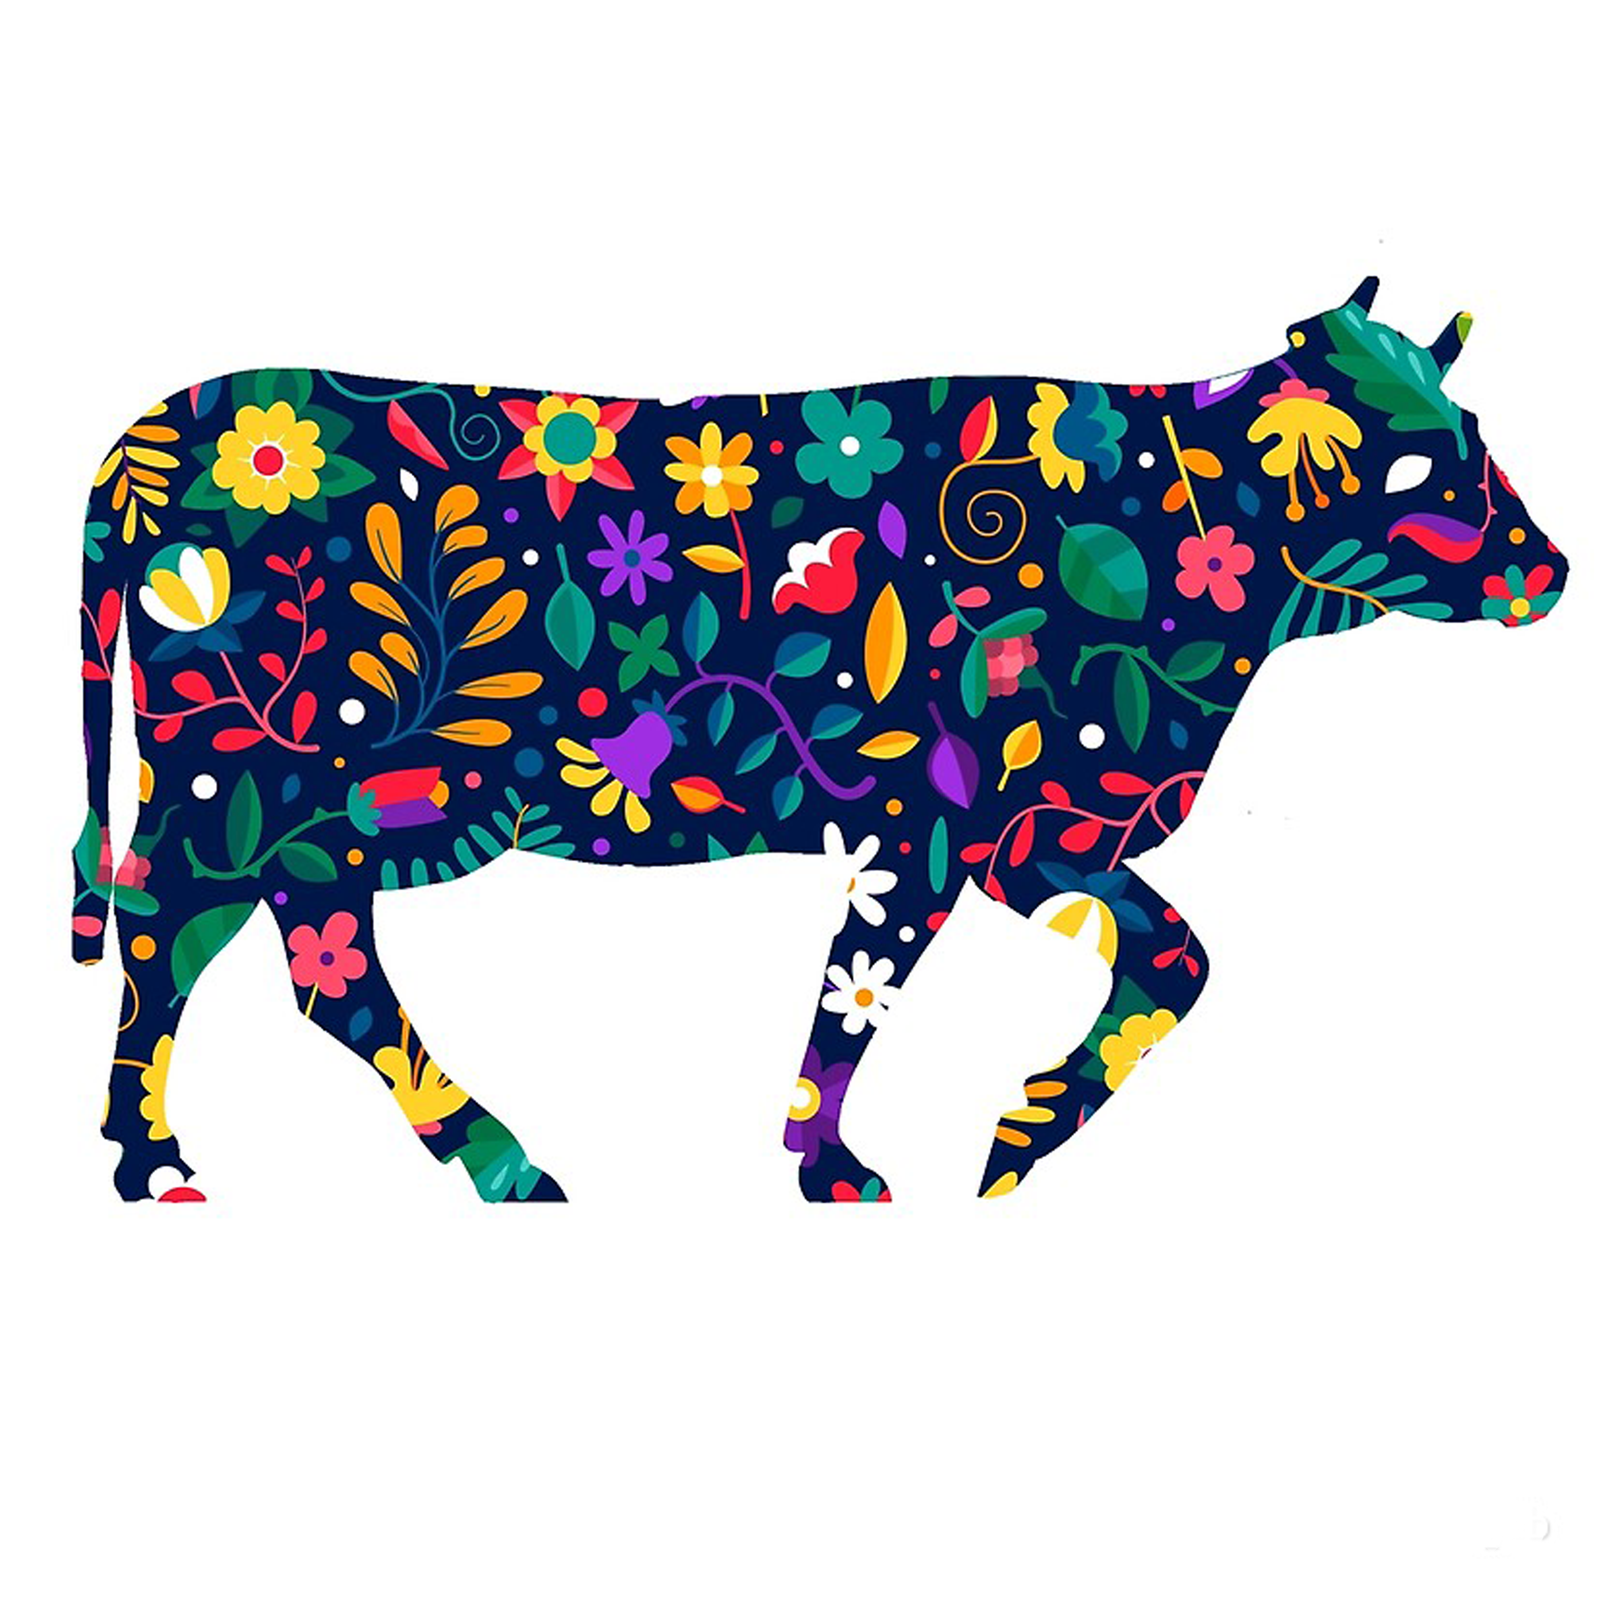 Cow pattern image flowers cow illustration farm animals